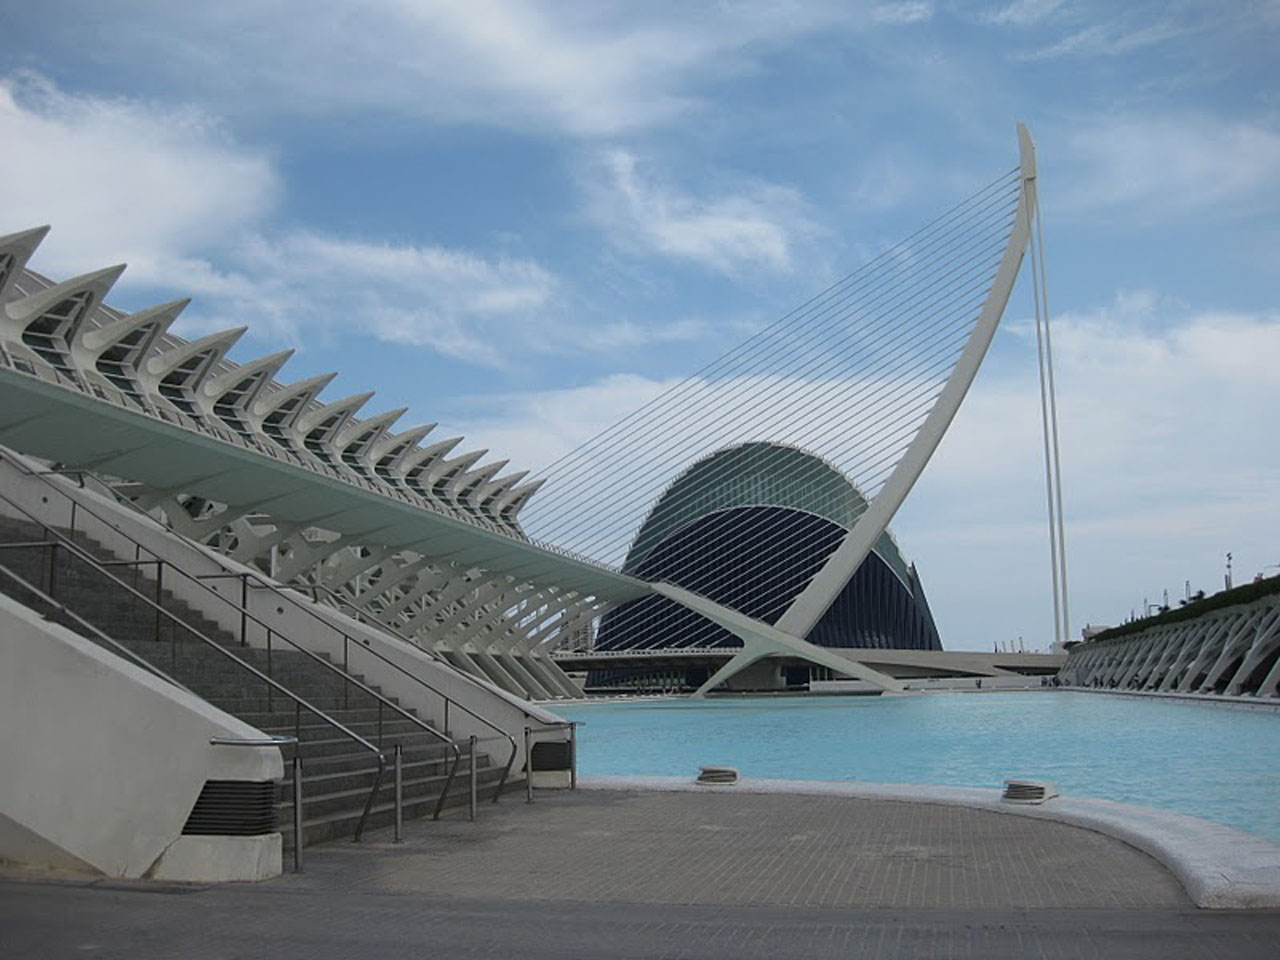 Valencia’s City of Arts and Sciences